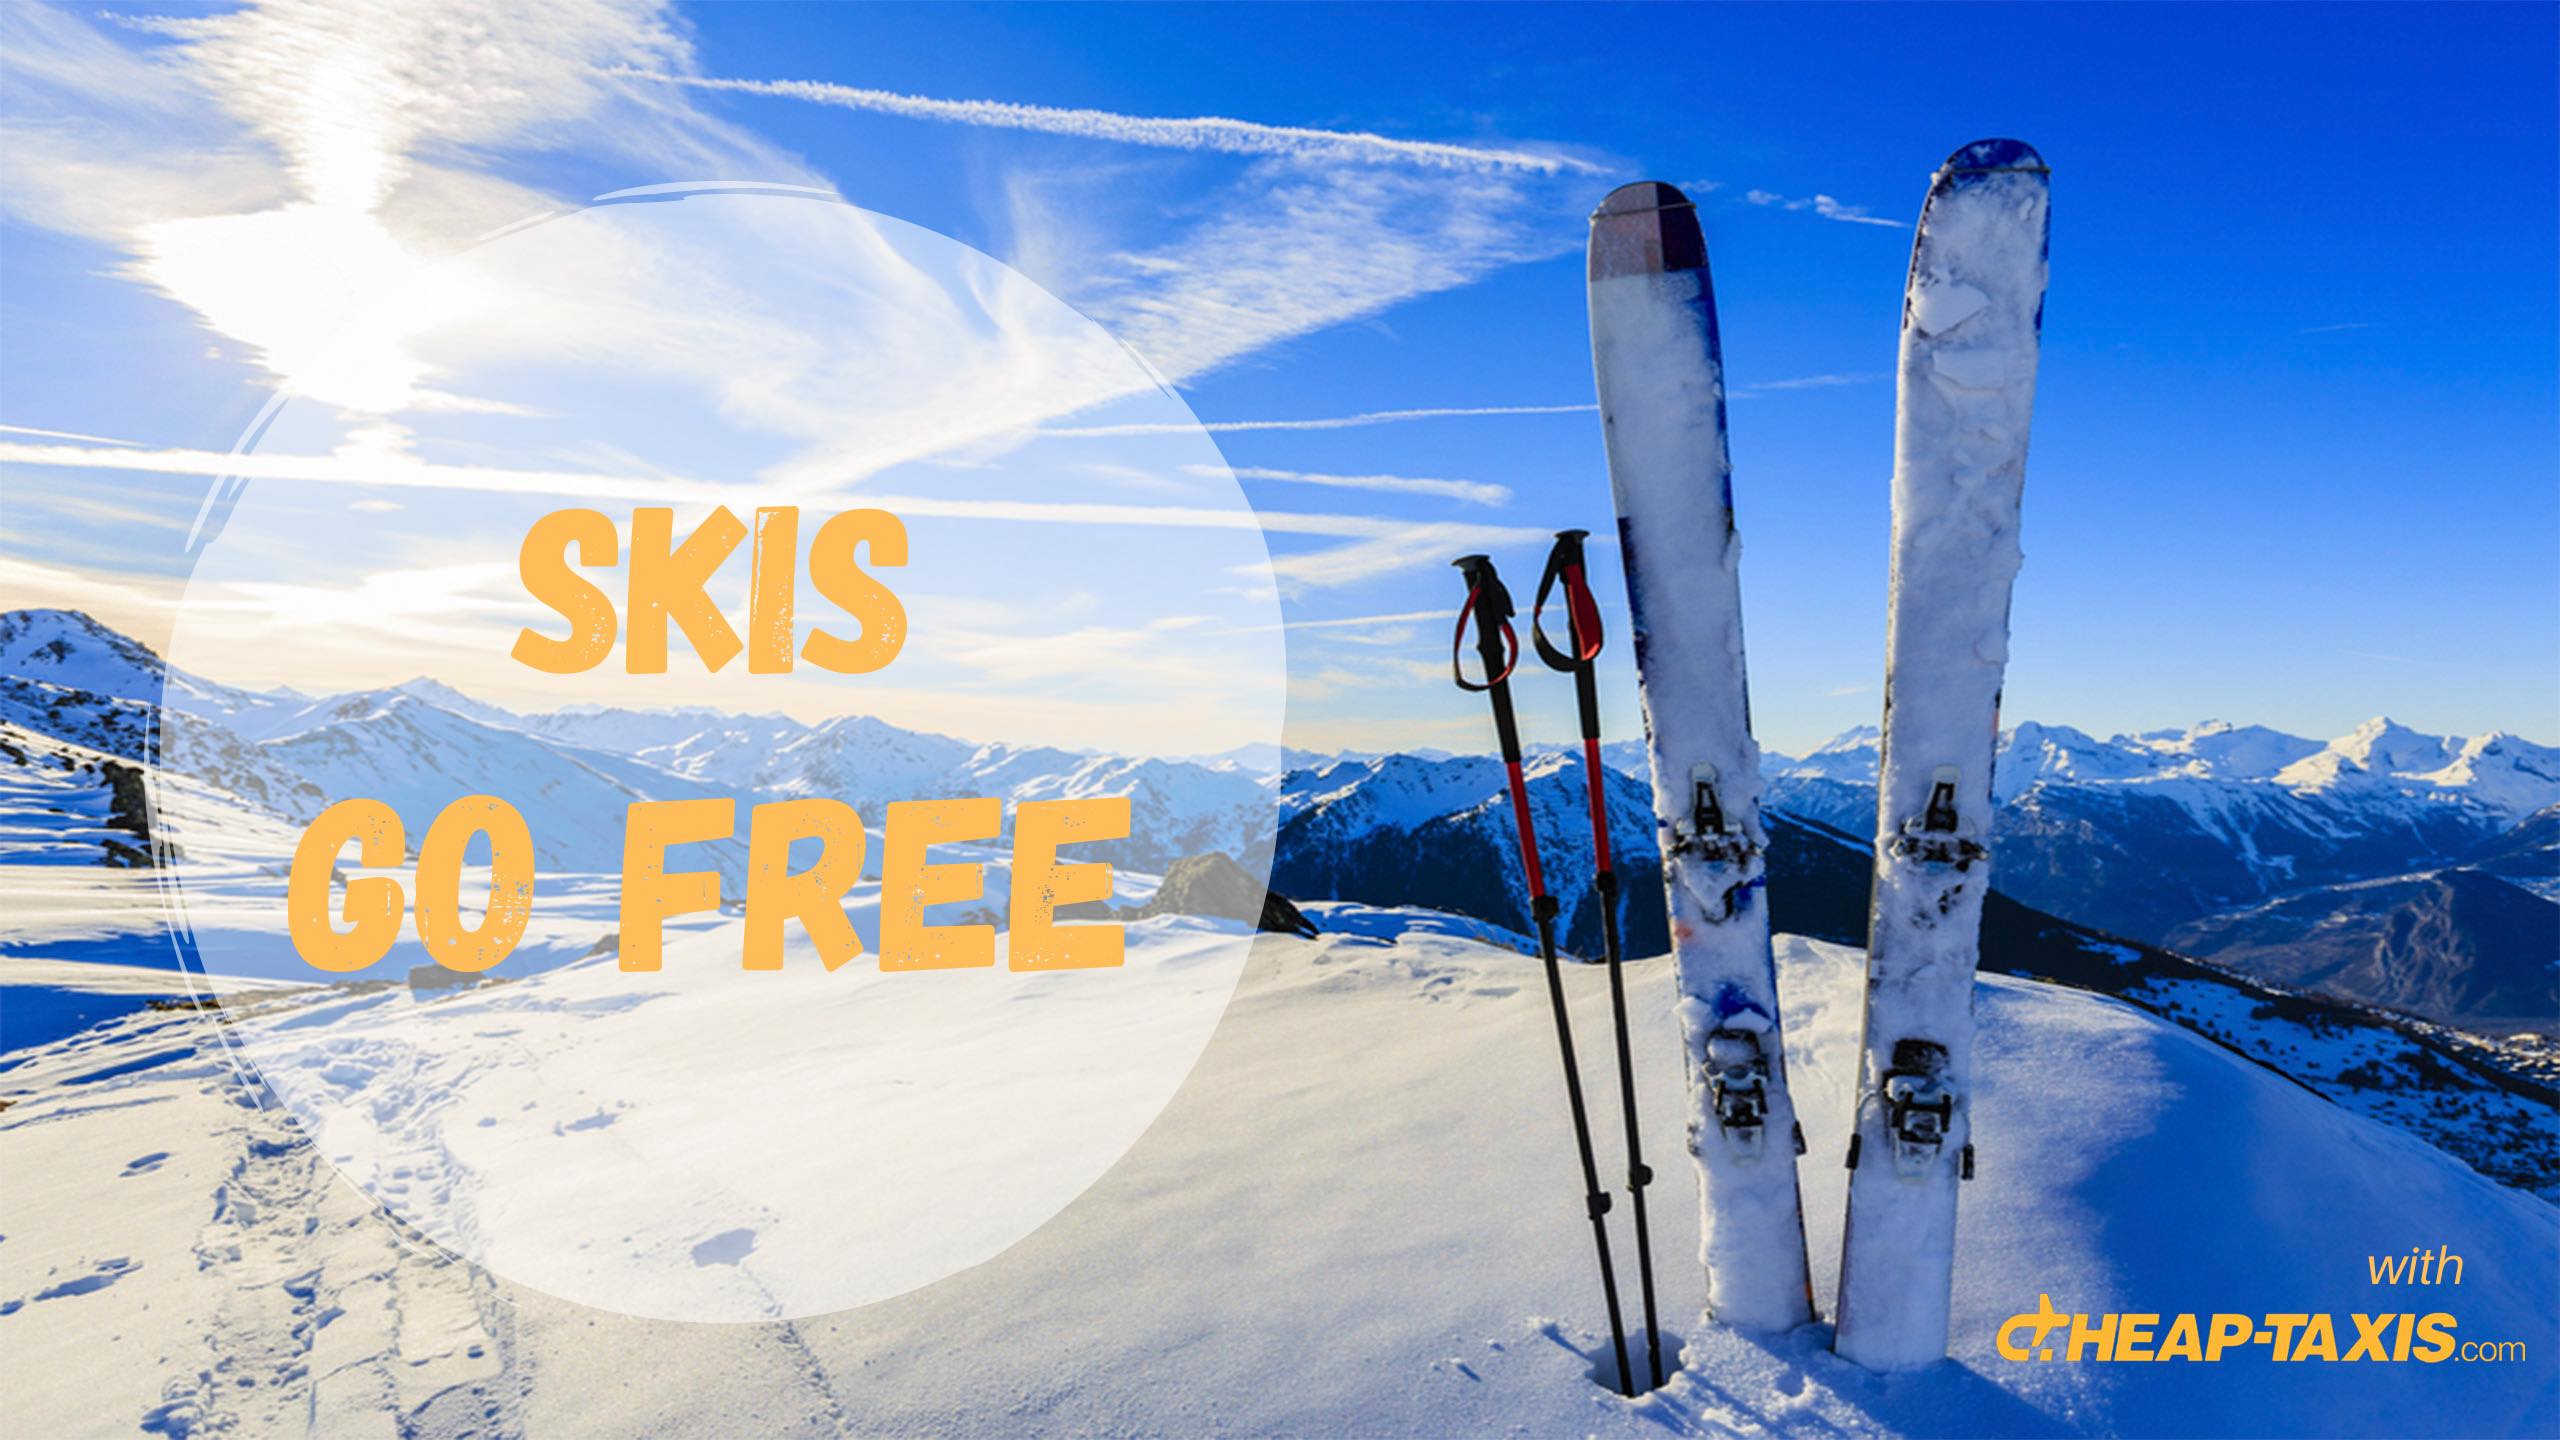 Ski go free from Munich airport